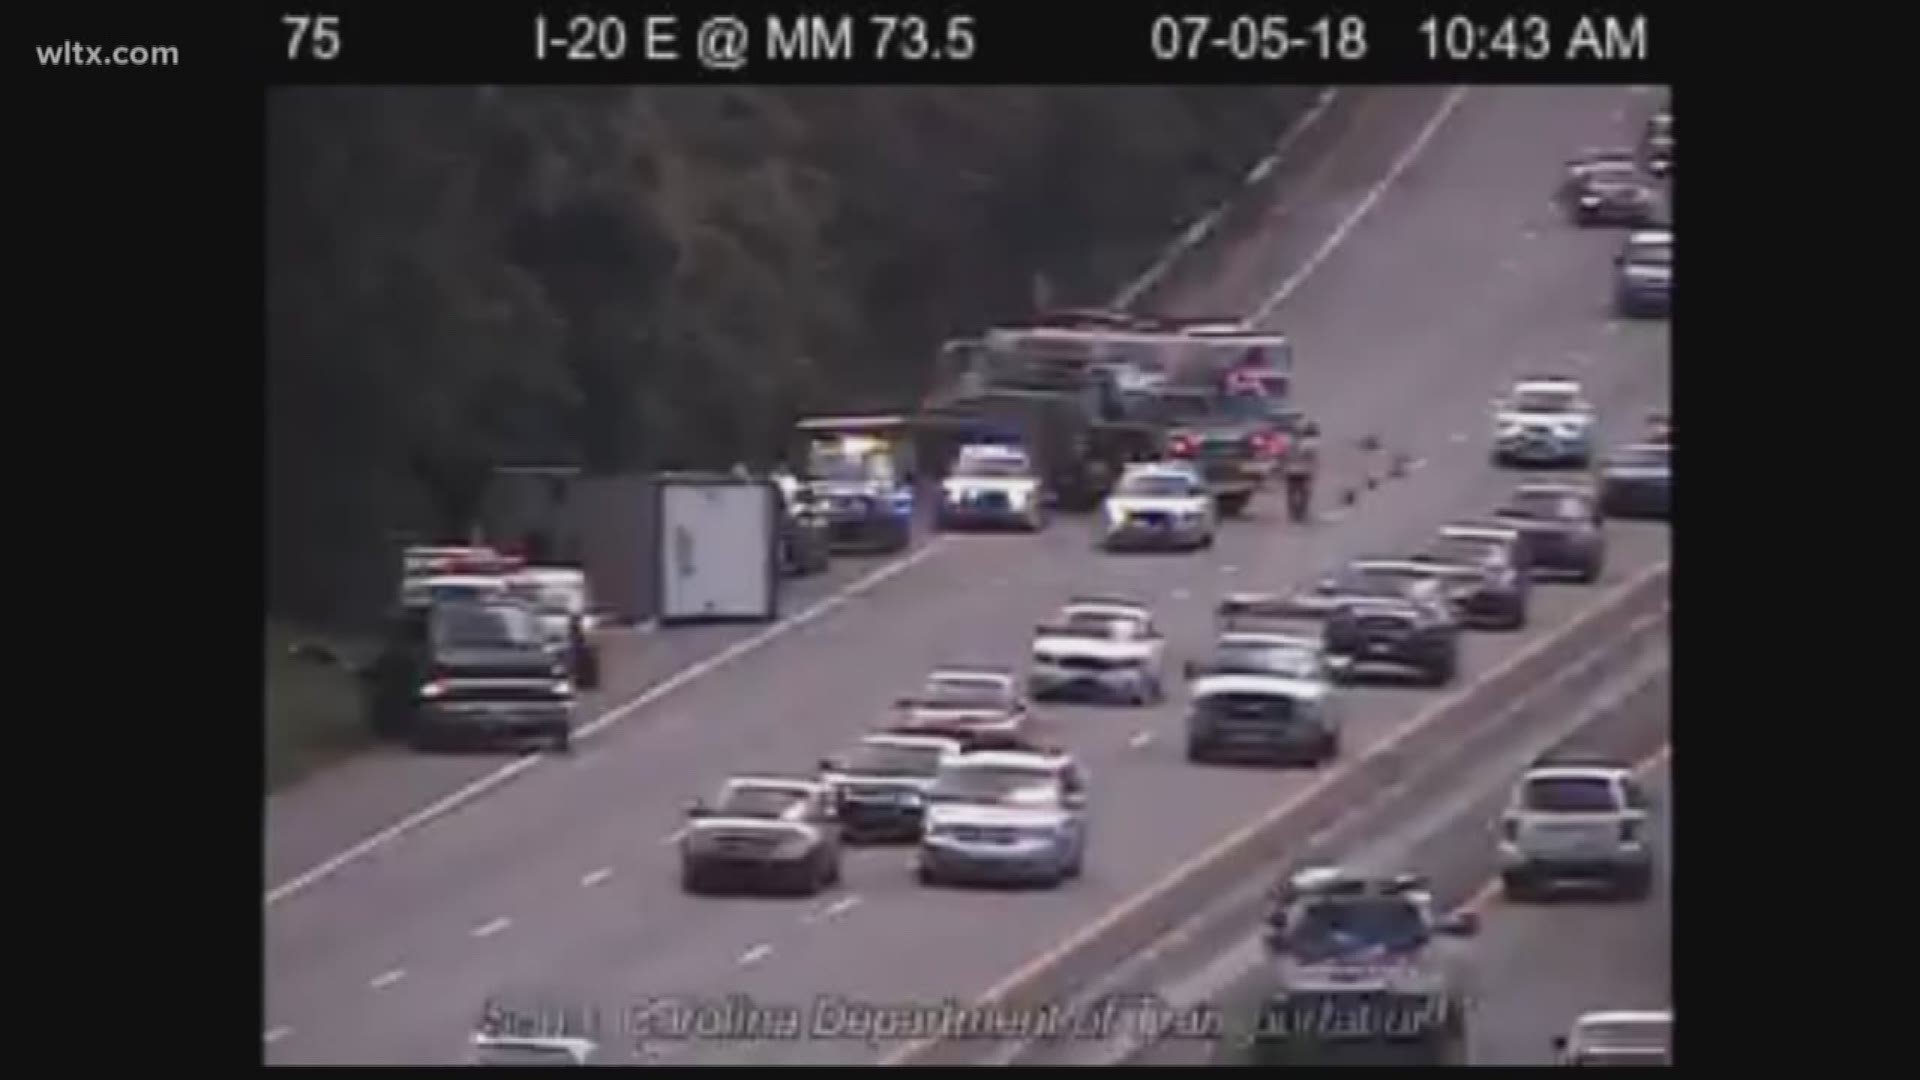 The wreck involved multiple vehicles near Lexington, South Carolina.